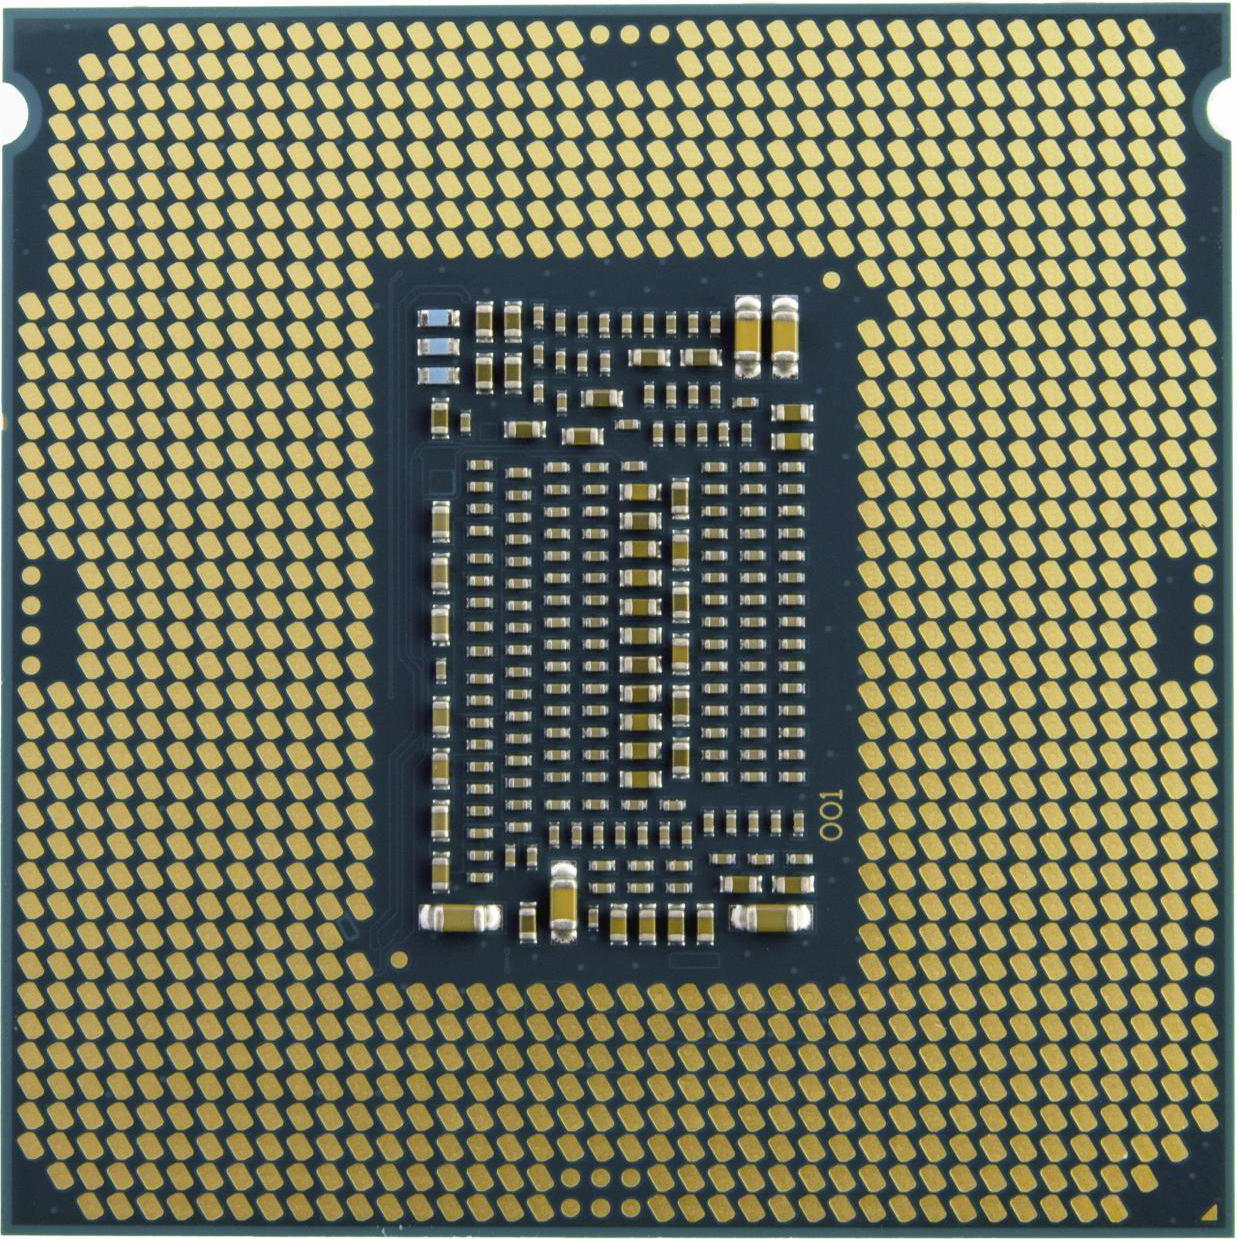 Intel BX80701G5905 Processore CPU 3,5 GHz Scatola 4 MB Intel Celeron G5905